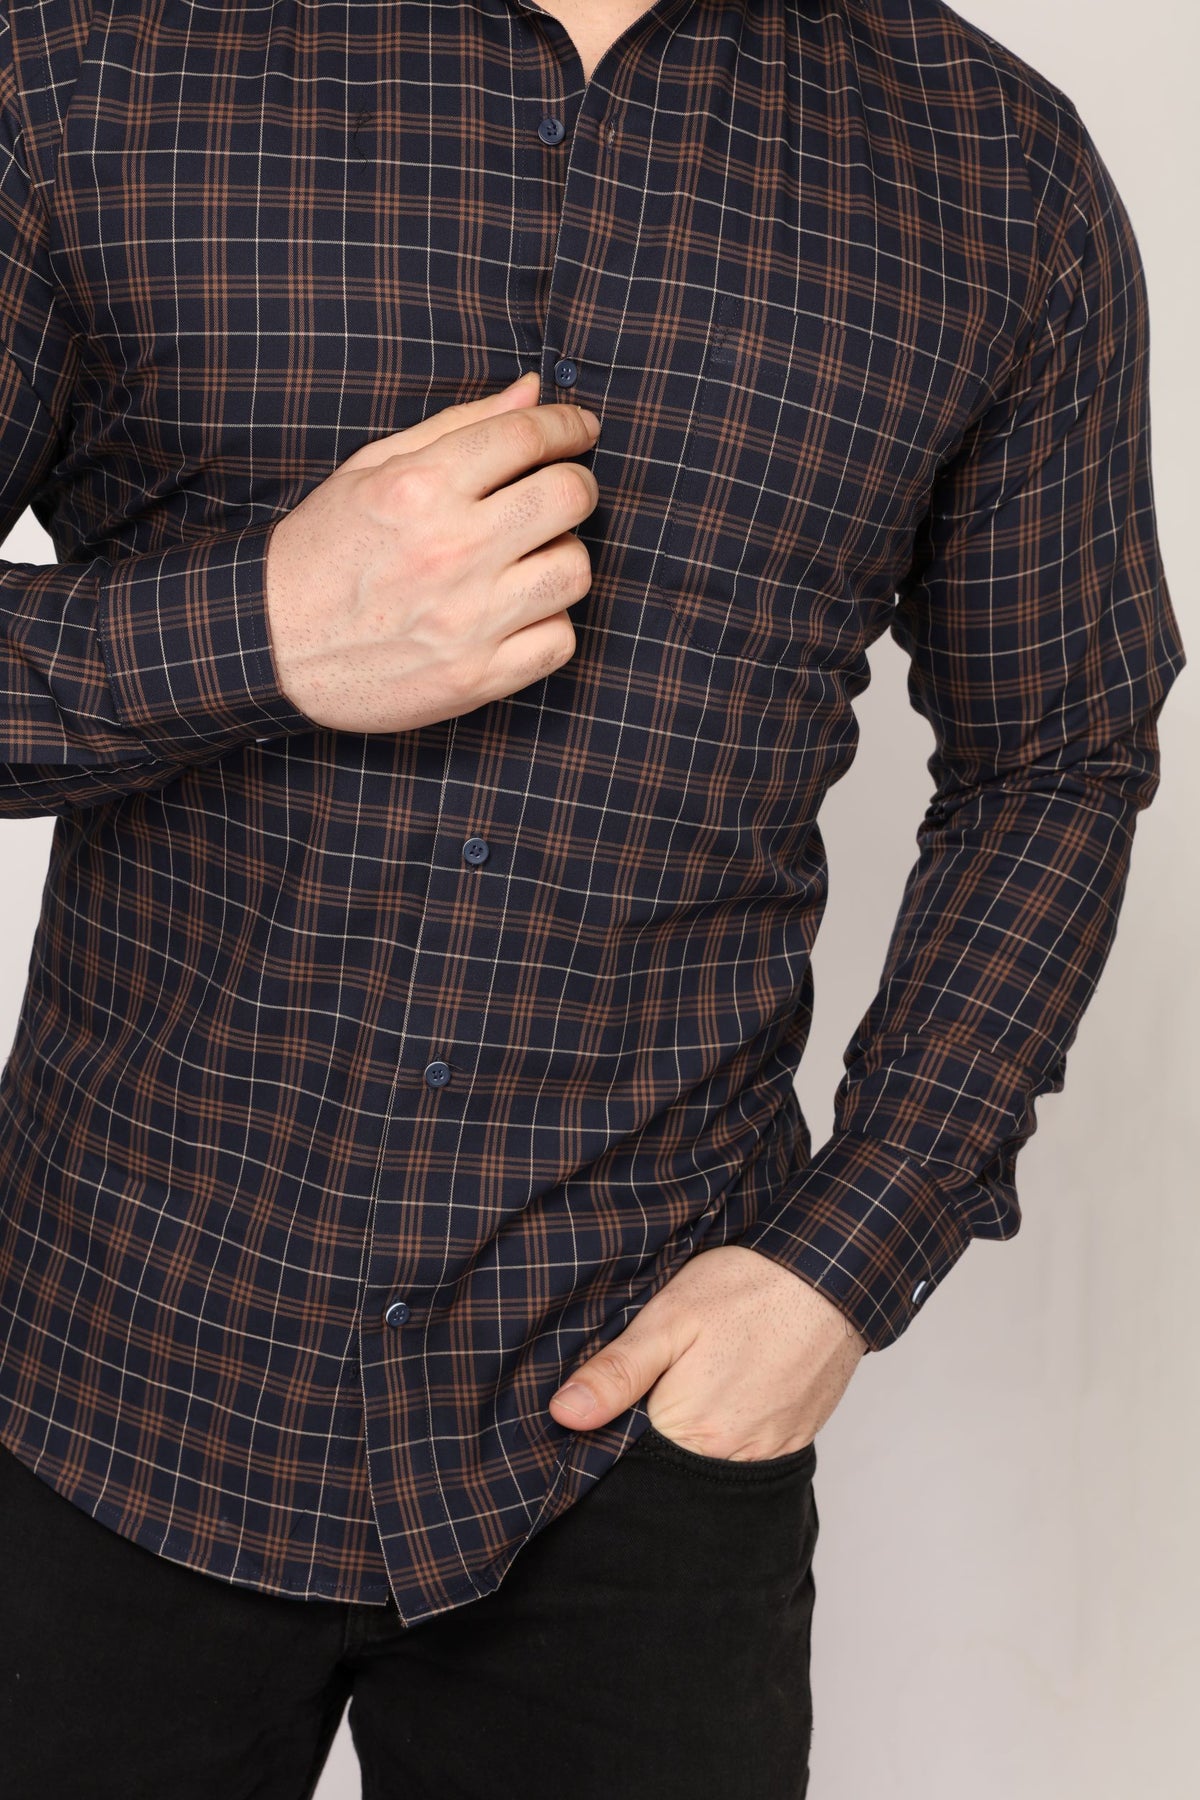 Kingston - Checkered slim fit shirt - John Watson